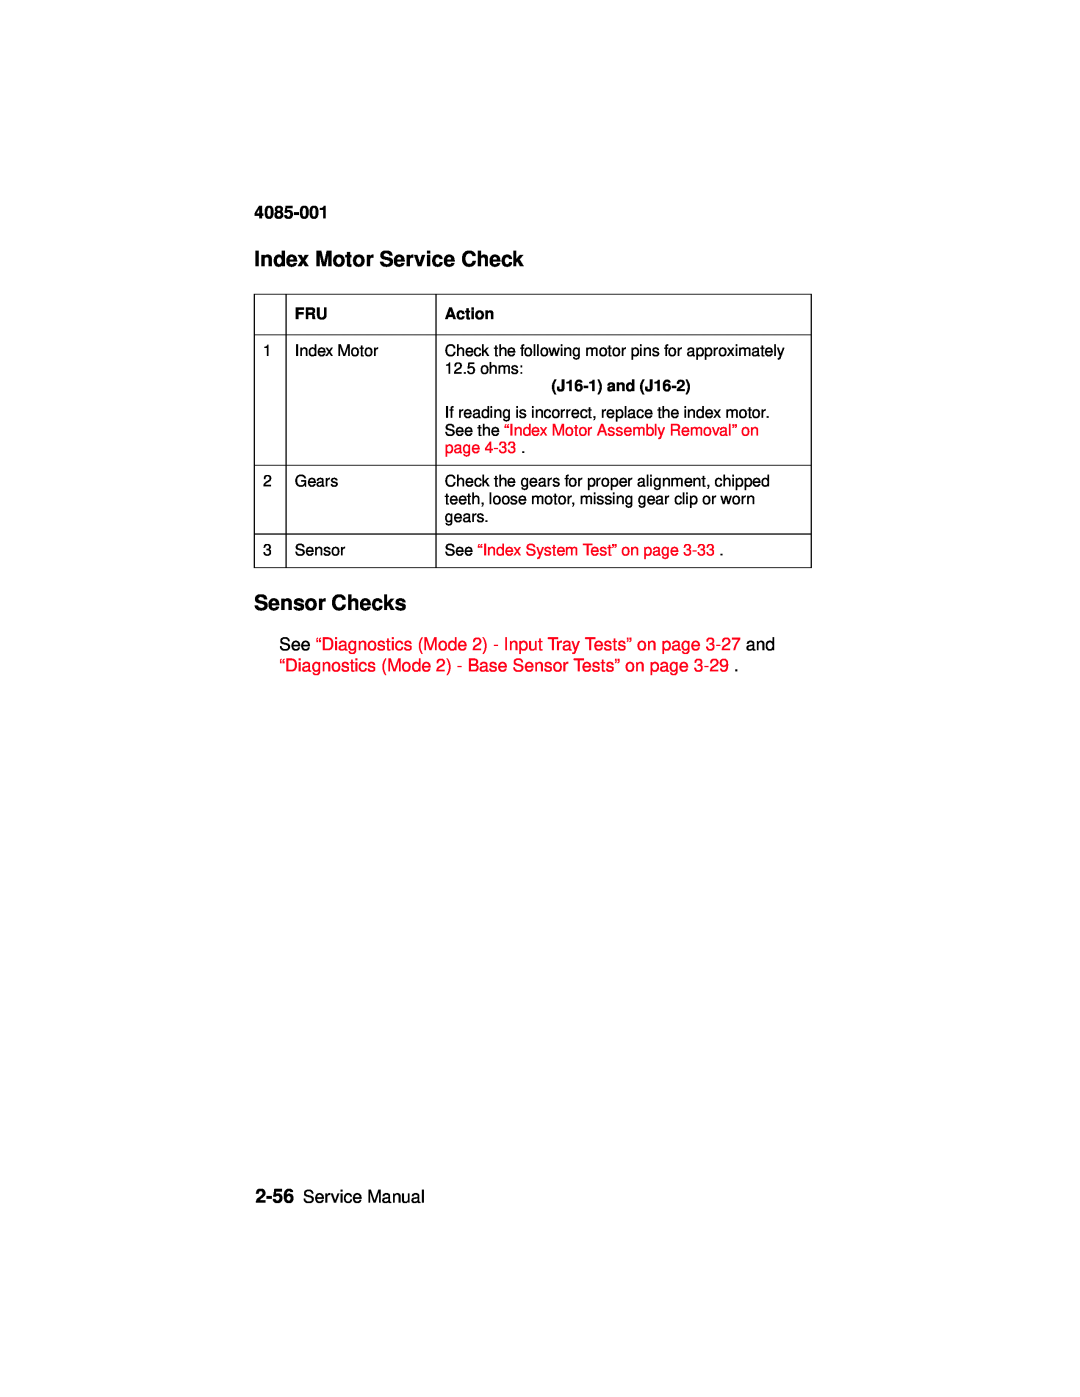 Lexmark J110, Printer manual Index Motor Service Check, Sensor Checks, 4085-001, Service Manual 